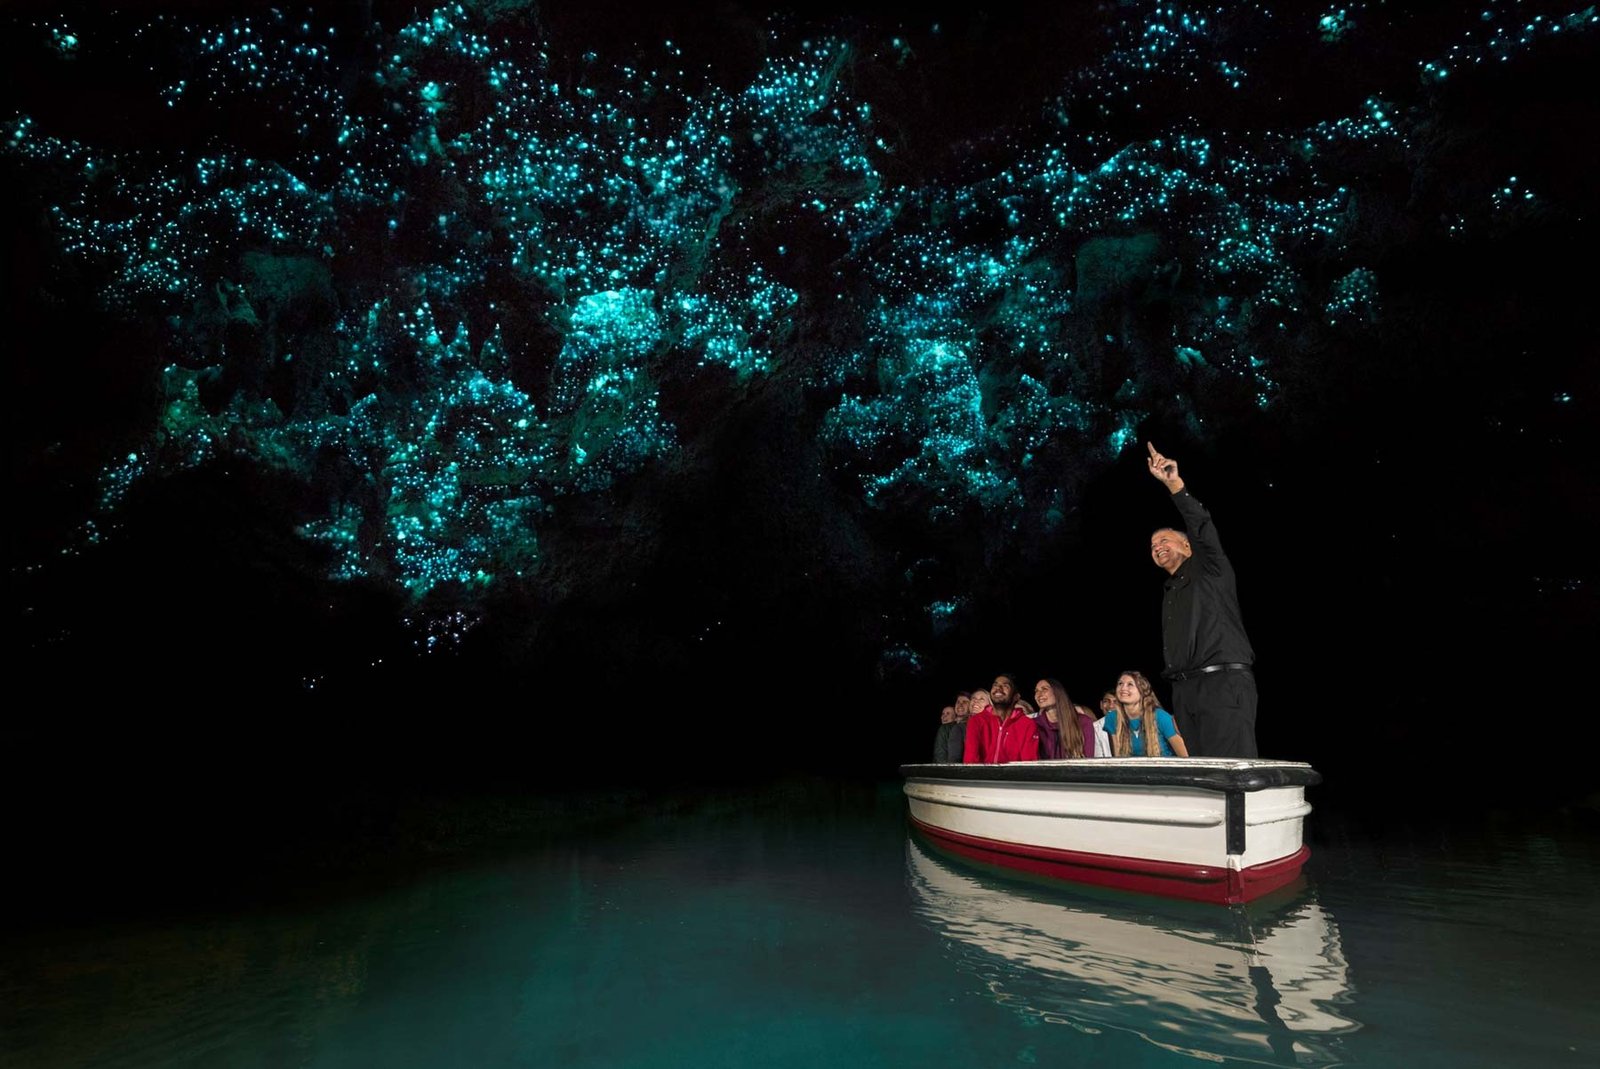 Waitomo Glowworm Caves | New Zealand's North Island in 1 Week: Road Trip Highlights and Itinerary